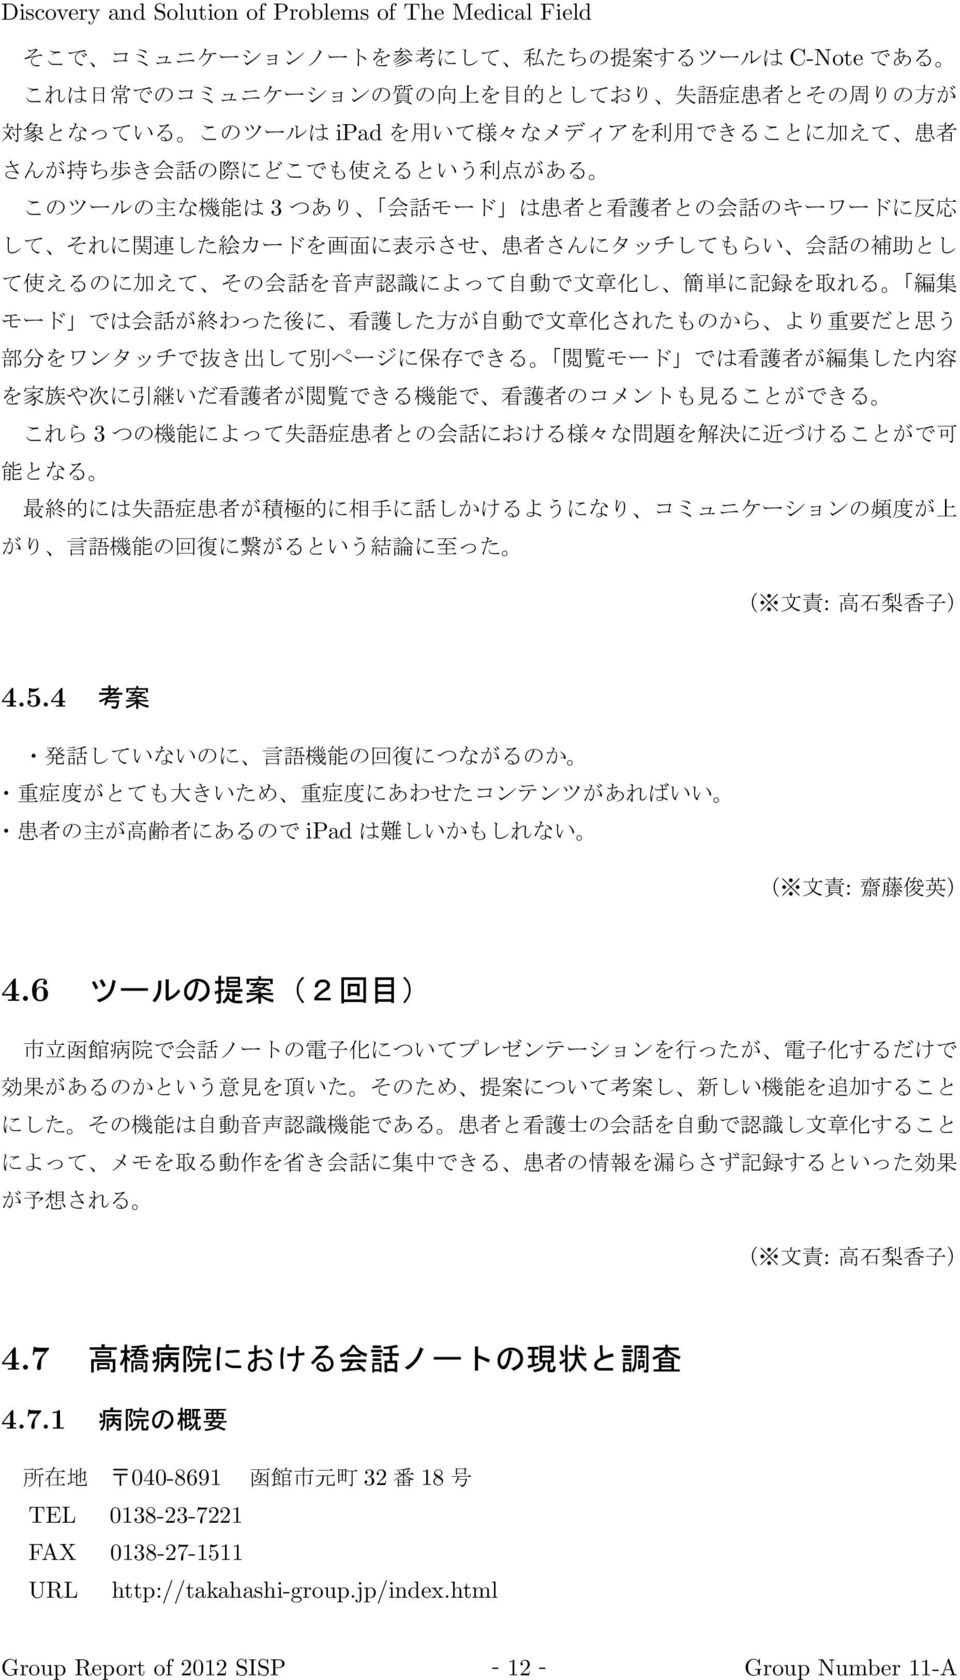 0138-27-1511 URL http://takahashi-group.